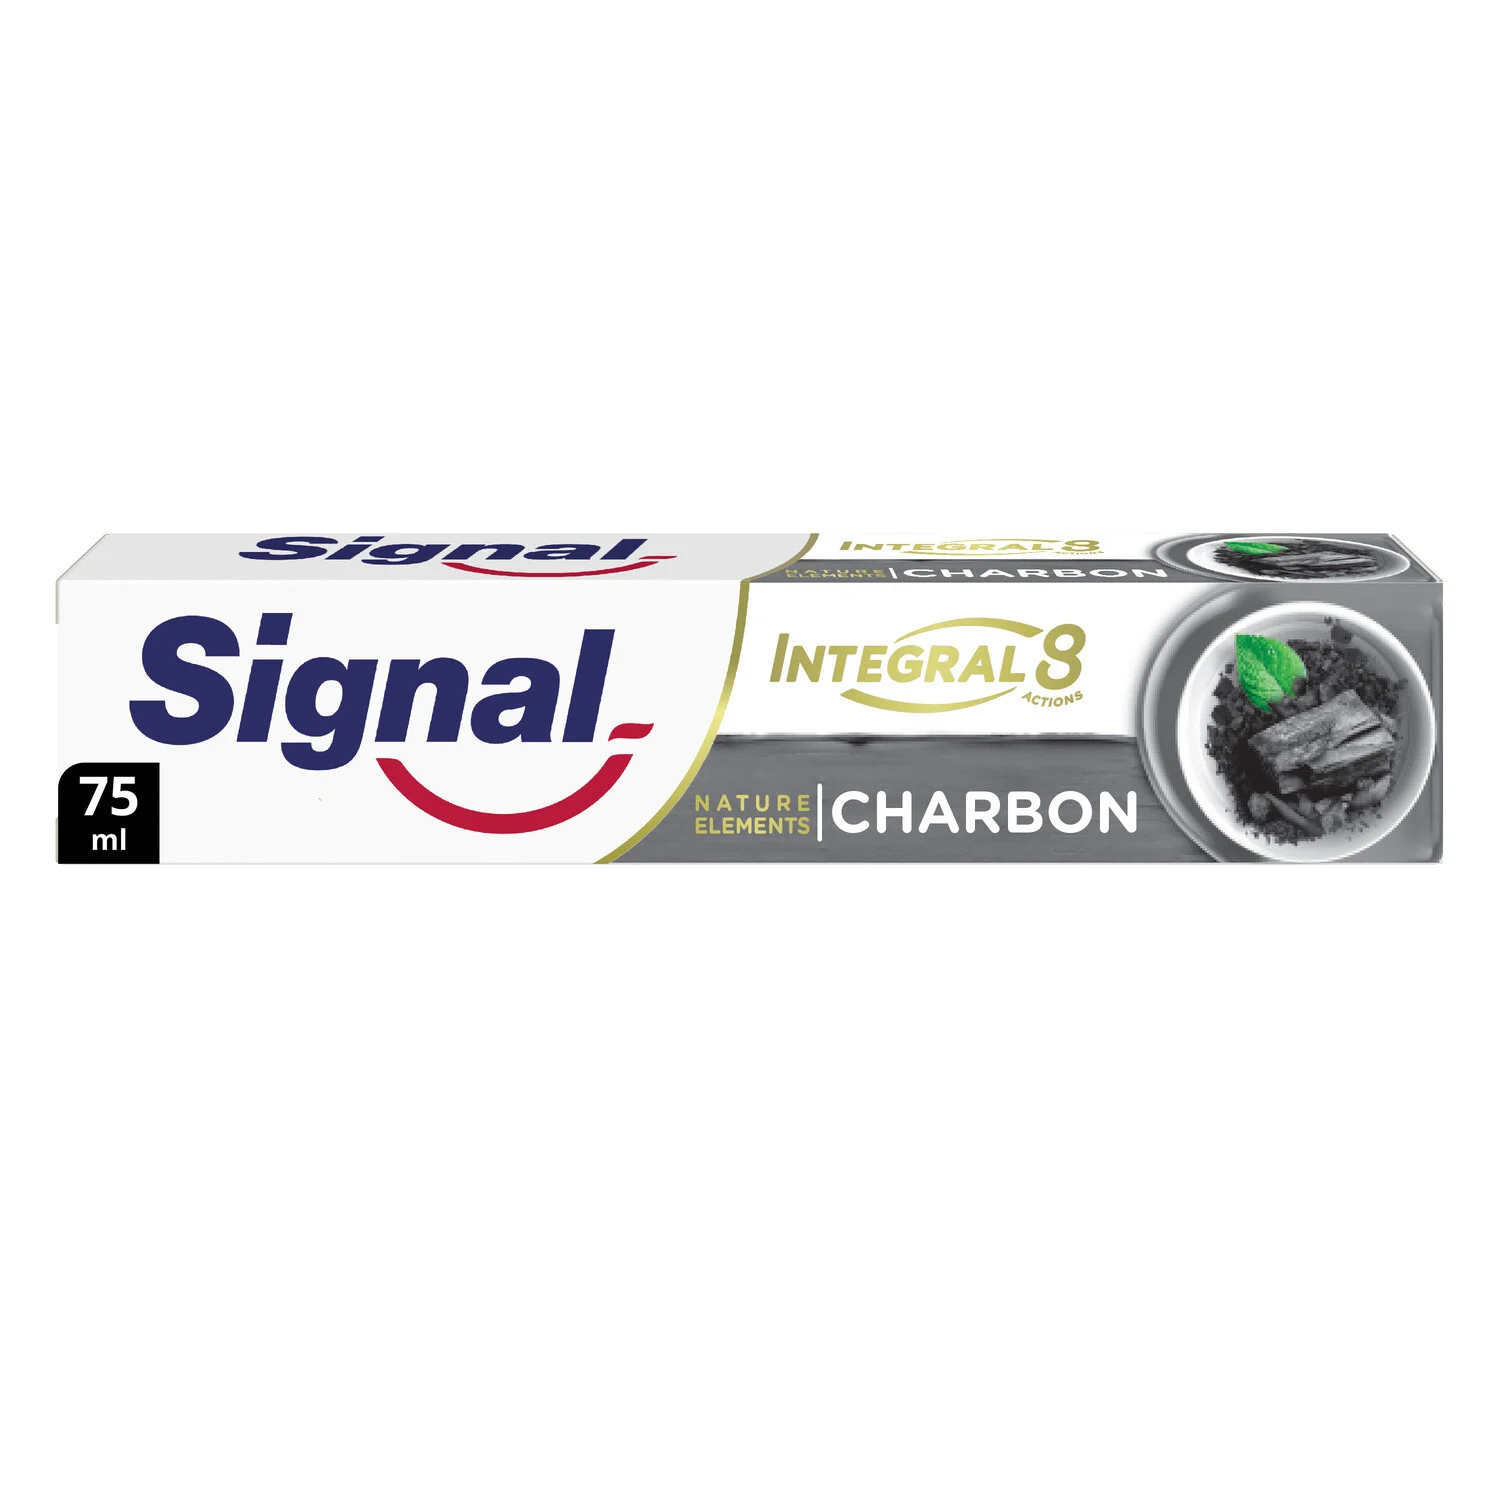 Dentifrice Integral 8 Nature Elements Charbon 75ml -signal